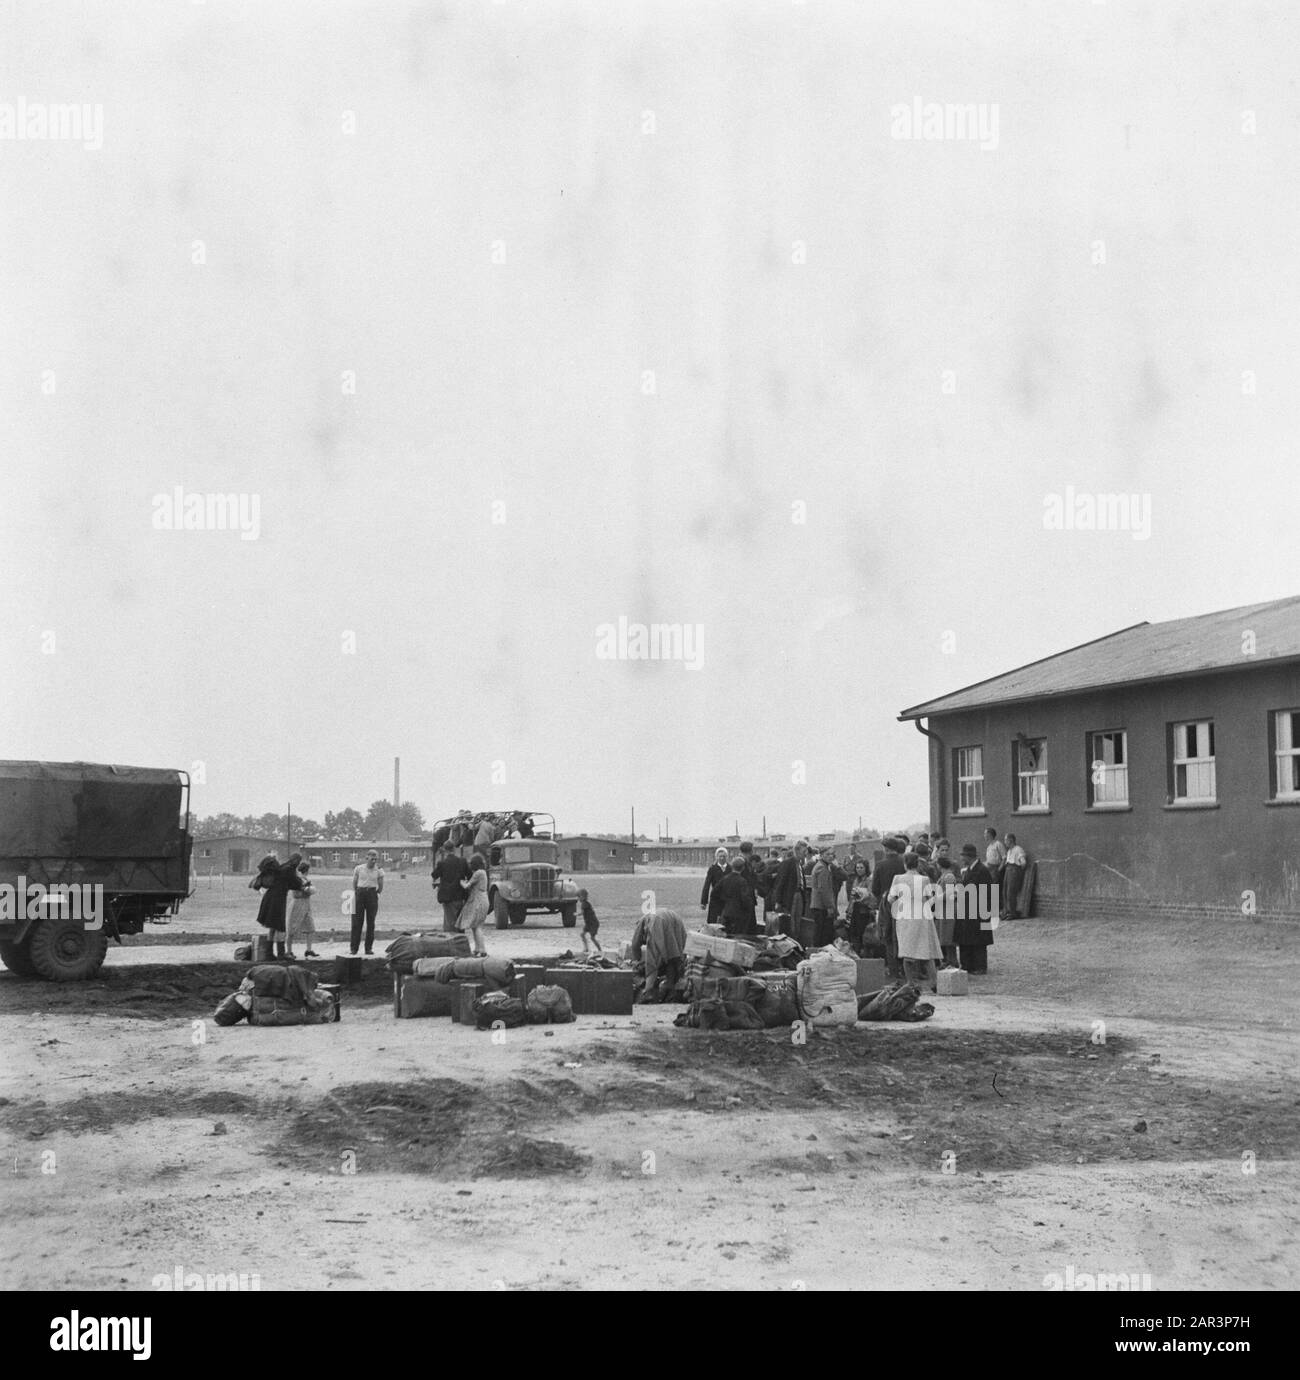 Repatriation Camp Rheine (Germany)  [Repatriants at a gathering place] Date: 1945 Location: Germany, Rheine Keywords: repatriation, World War II Stock Photo